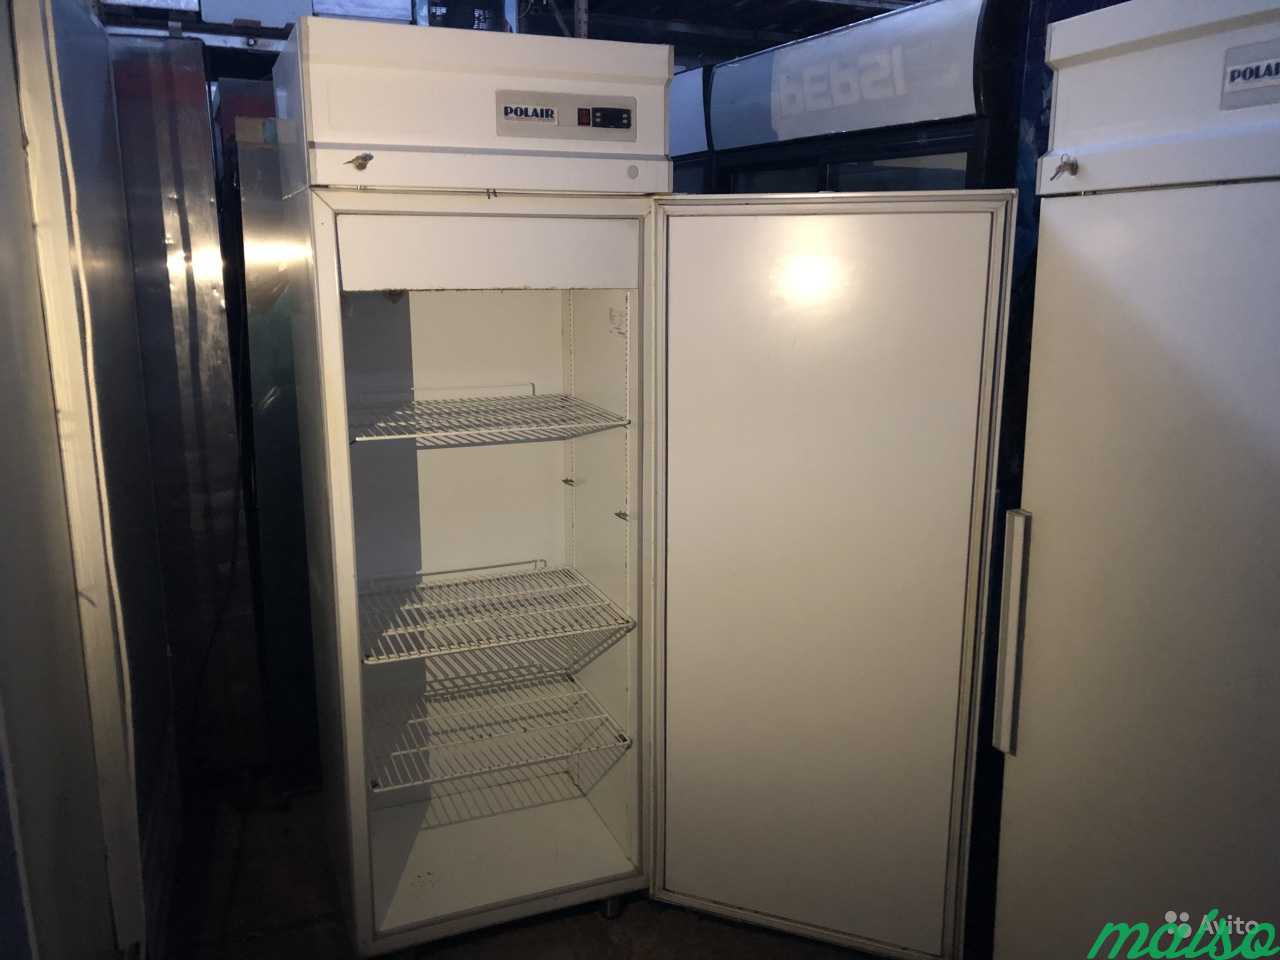 Cb107 s. Шкаф холодильный Polair cv105. Шкаф холодильный Polair cv105-s. Шкаф холодильный Polair cв107-s. Шкаф морозильный ШН-0,5(св 105-s).